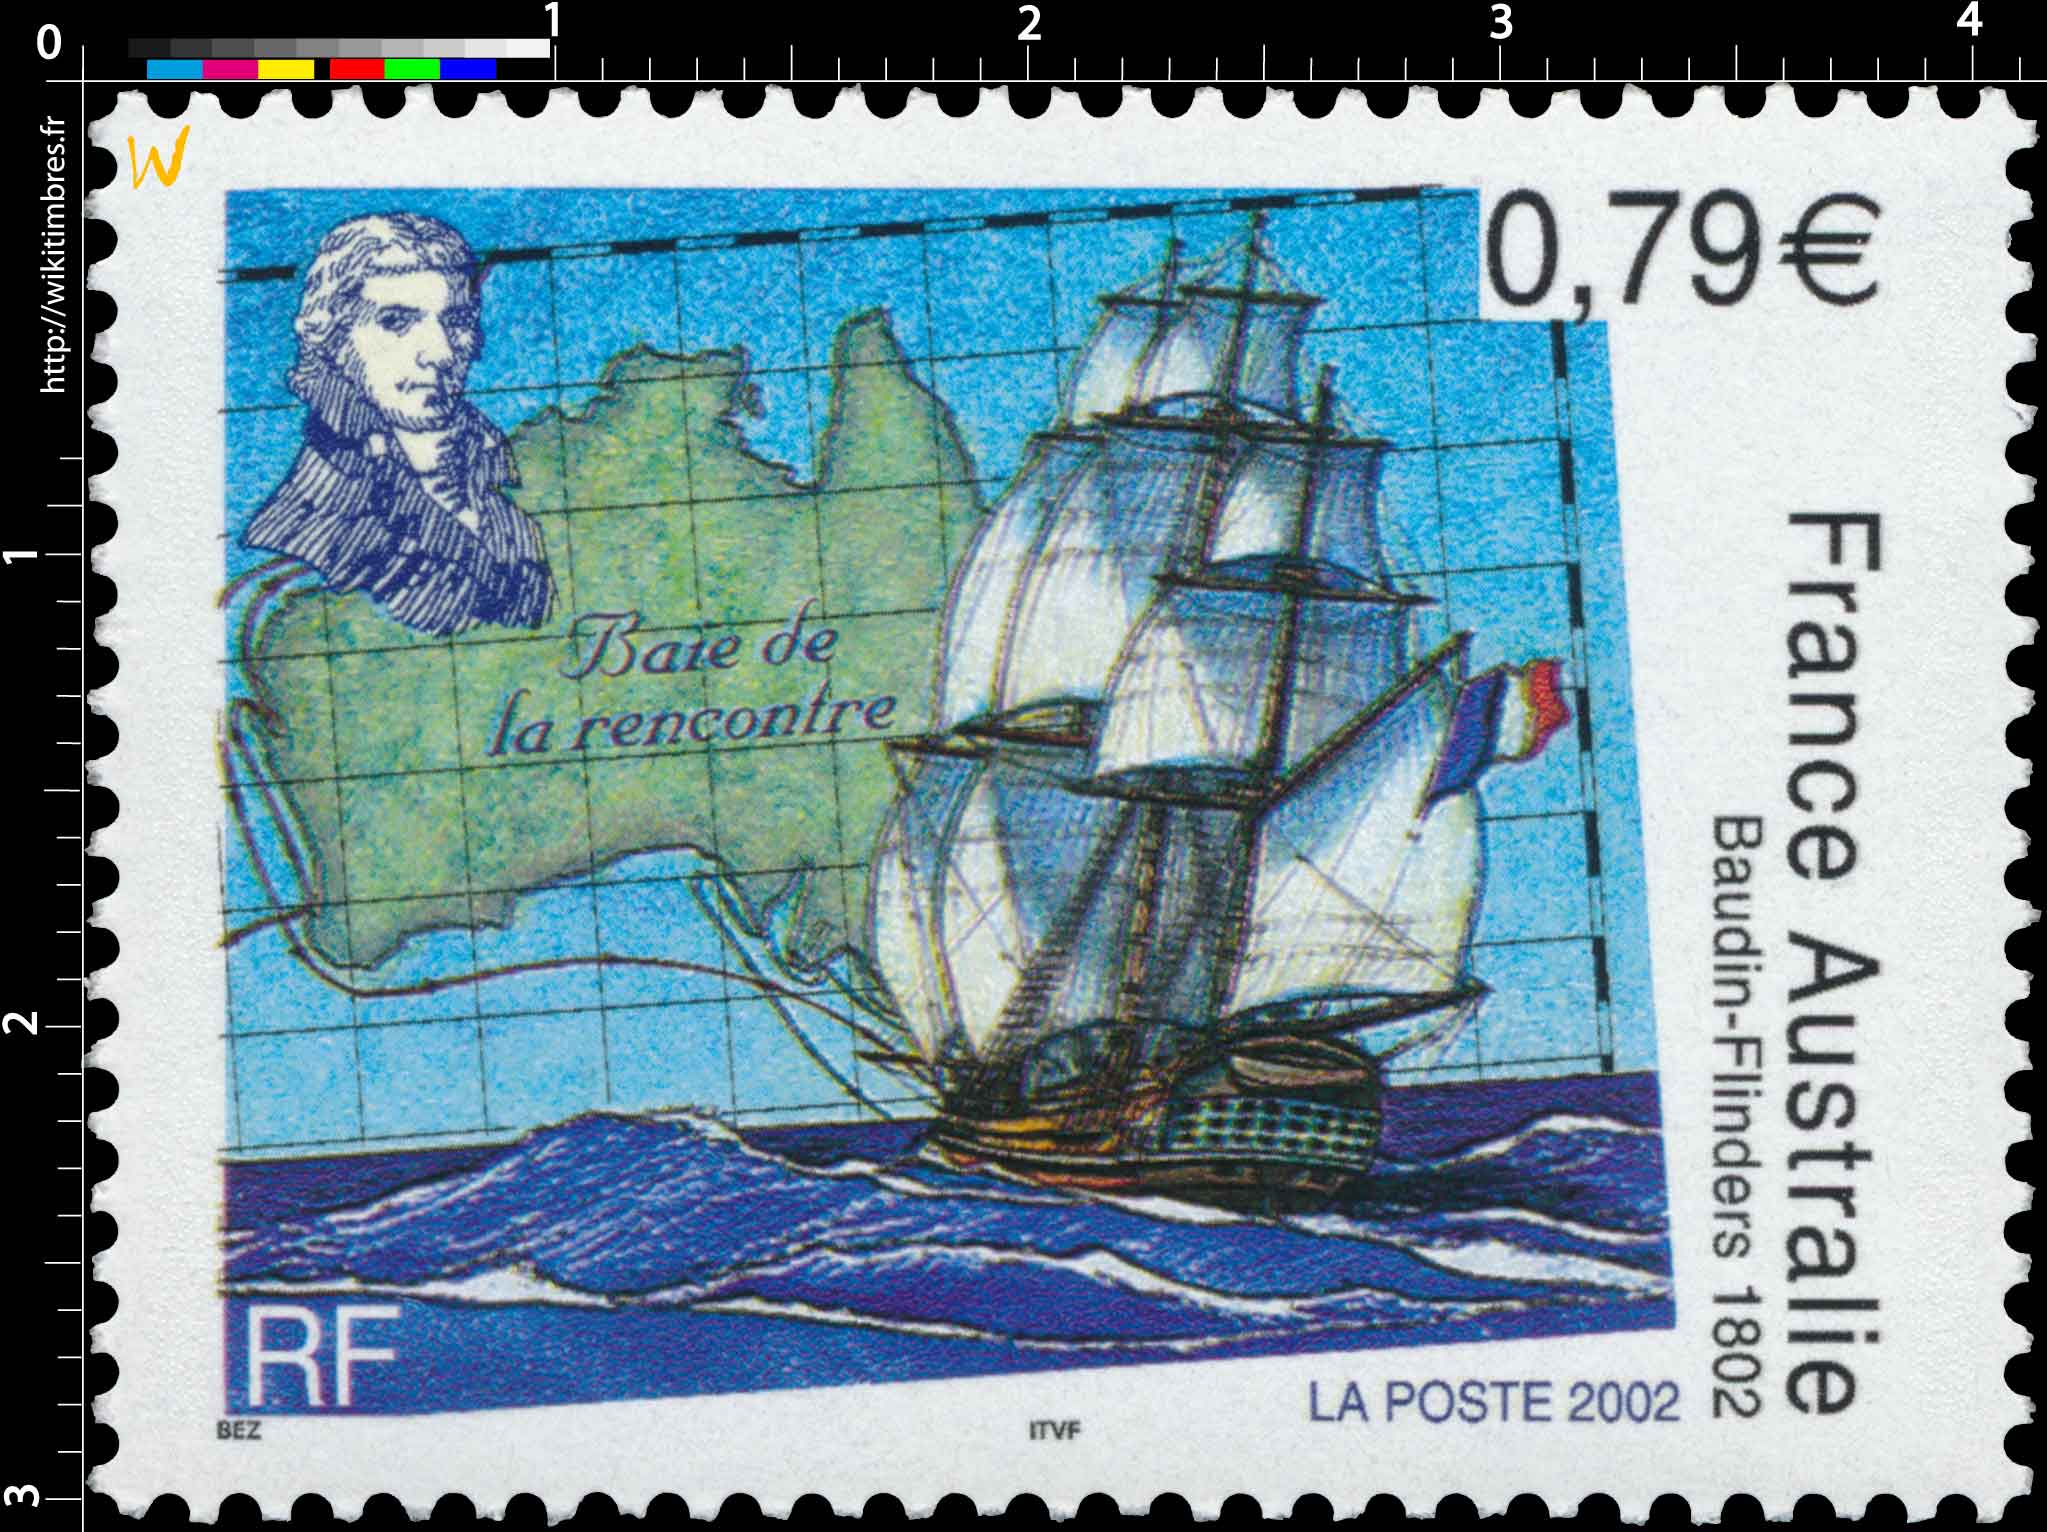 2002 France Australie Baudin-Flinders 1802 Baie de la rencontre